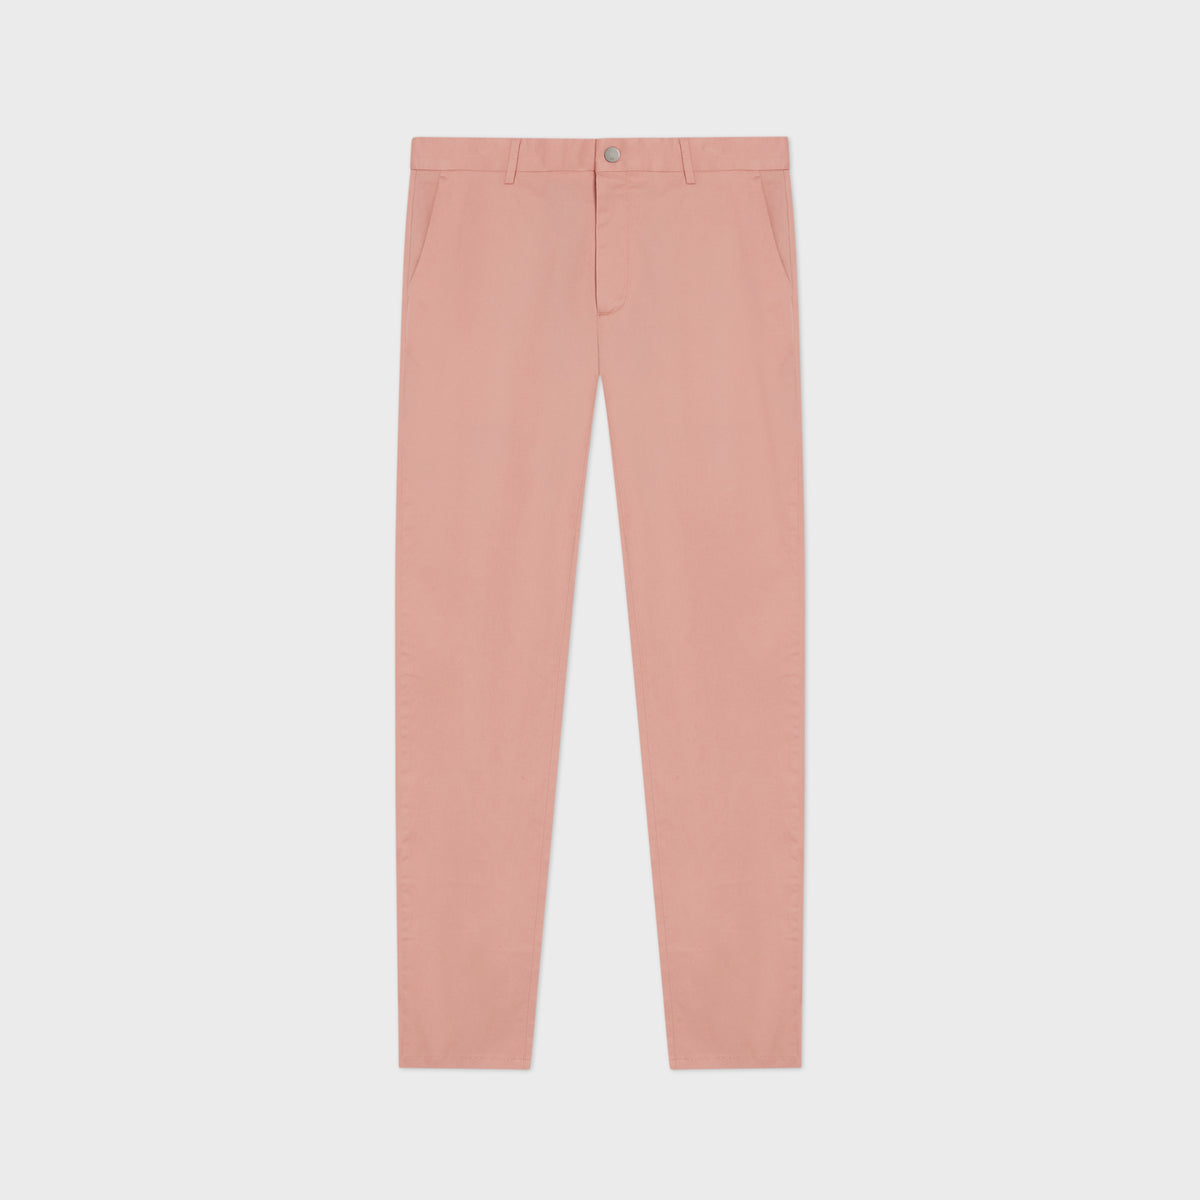 Coral Pink Everyday Men's Custom Fit Chino Pants - SPOKE - SPOKE